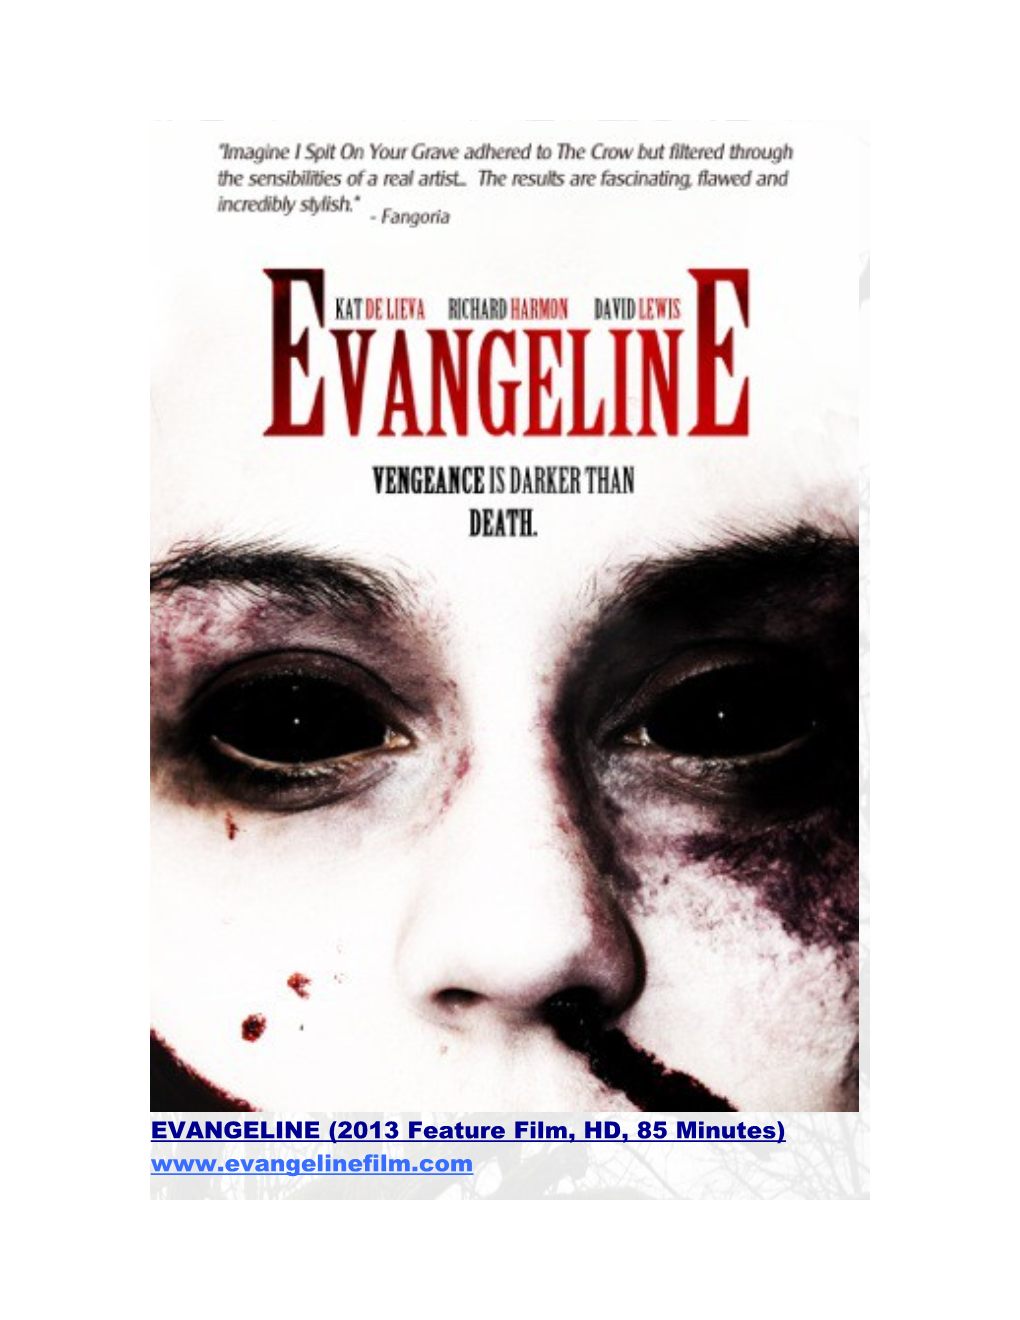 EVANGELINE (2013 Feature Film, HD, 85 Minutes)